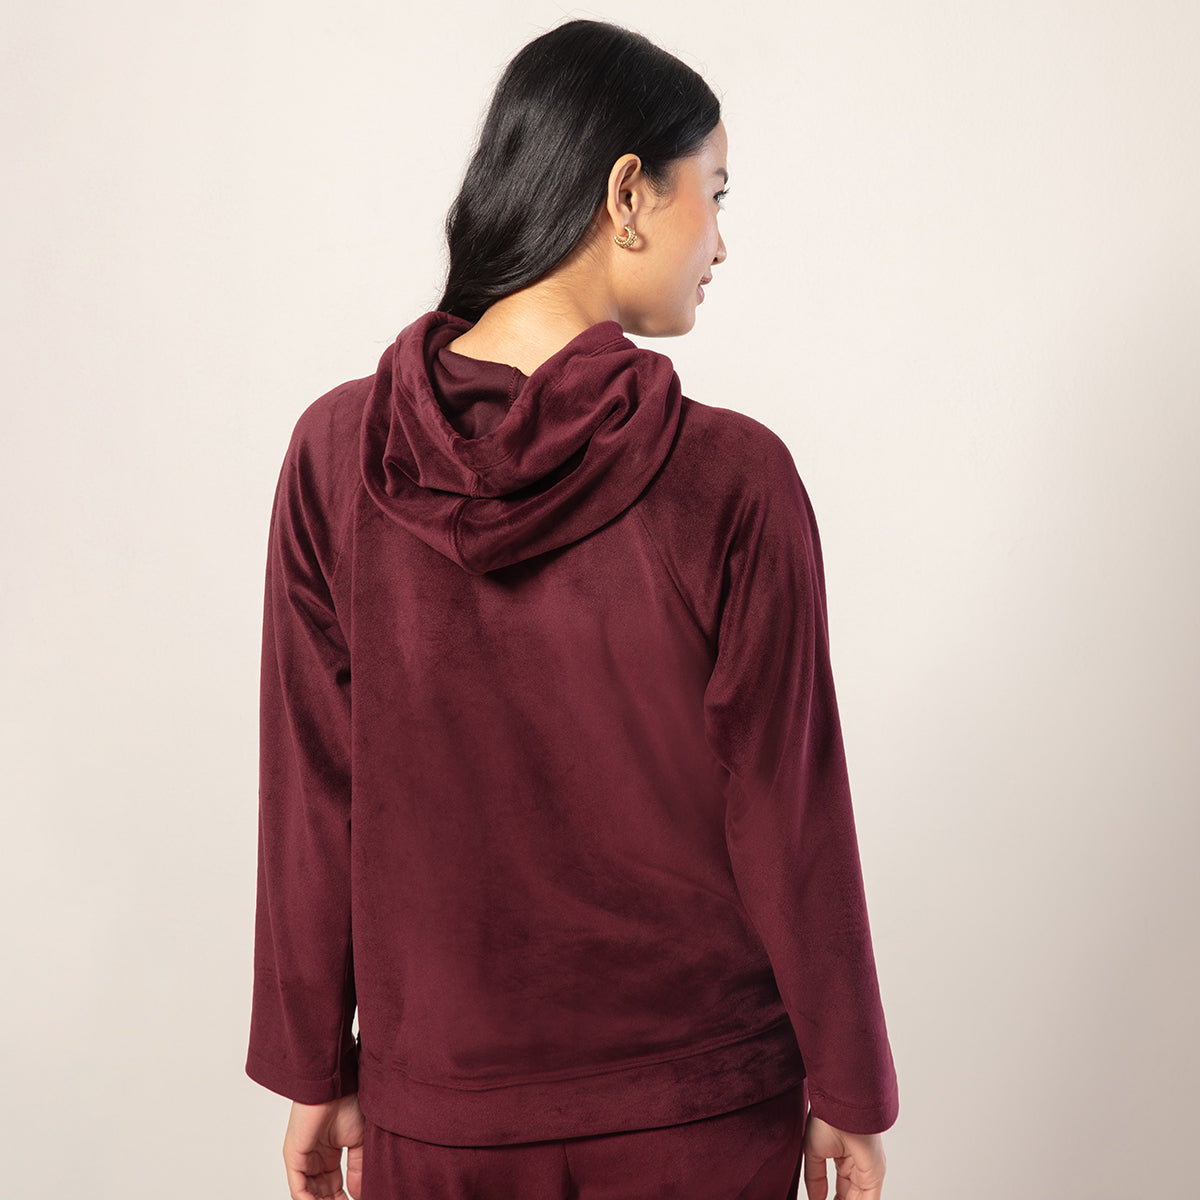 Hooded Velour Sweatshirt-Ruby Wine NYS052